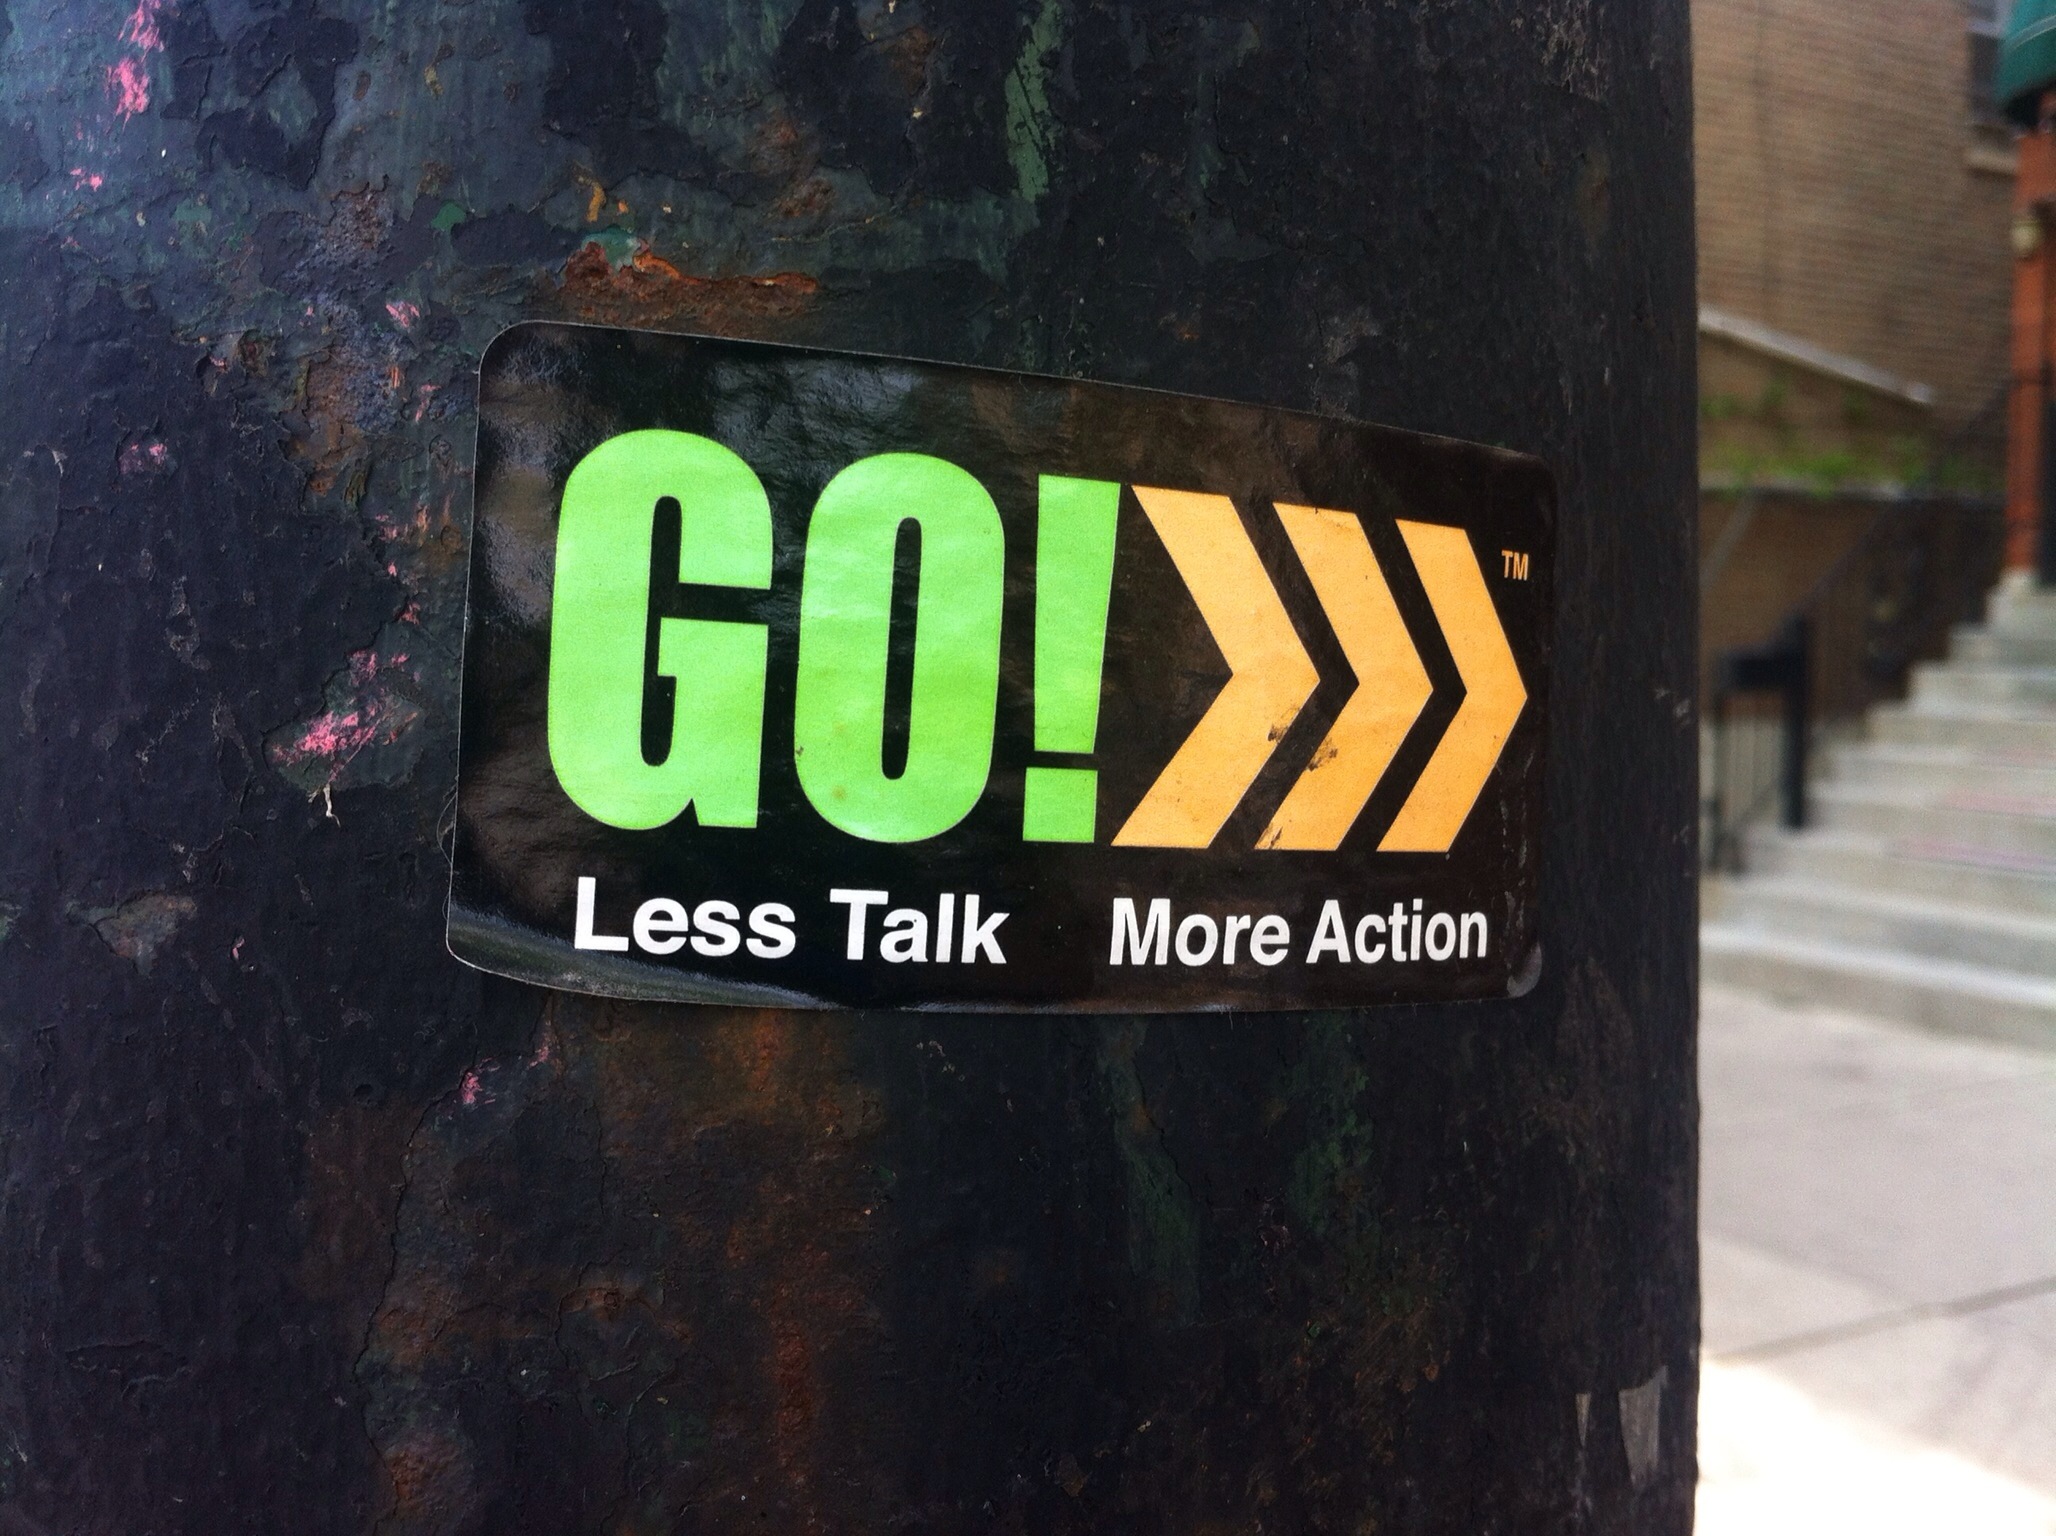 Less talk more. Less talk more Action. Talk less do more.